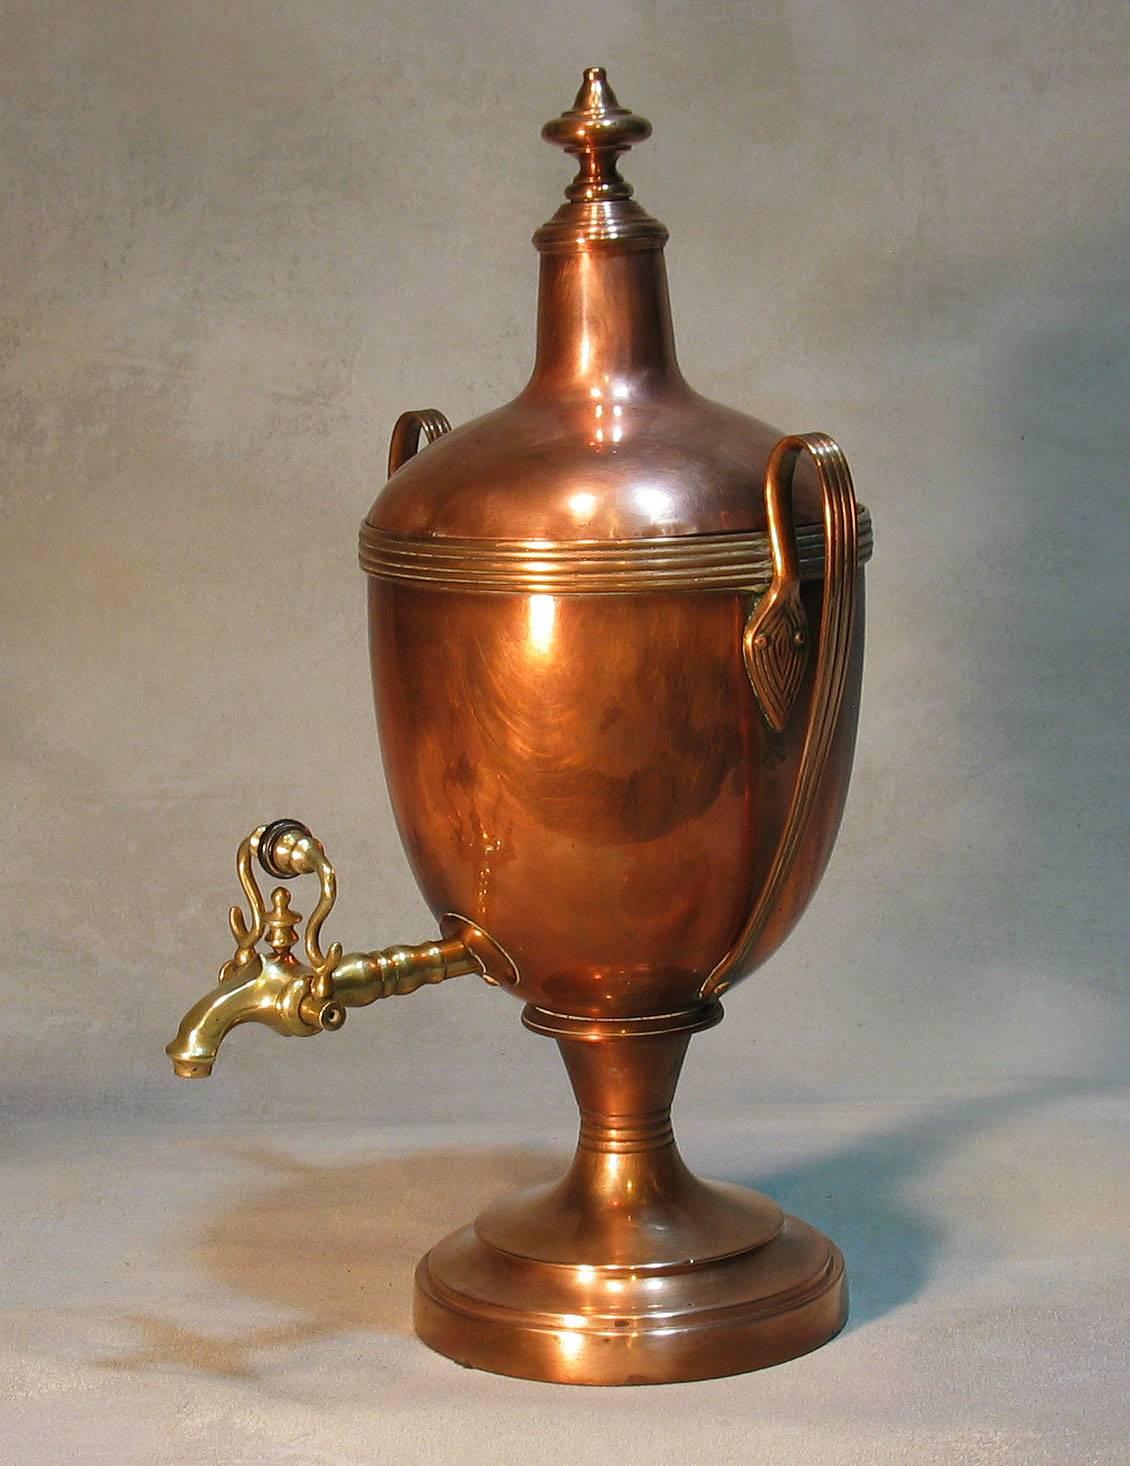 Victorian Copper Hot Water Urn, Paris Exhibition 1855 Medal Winner Design 2